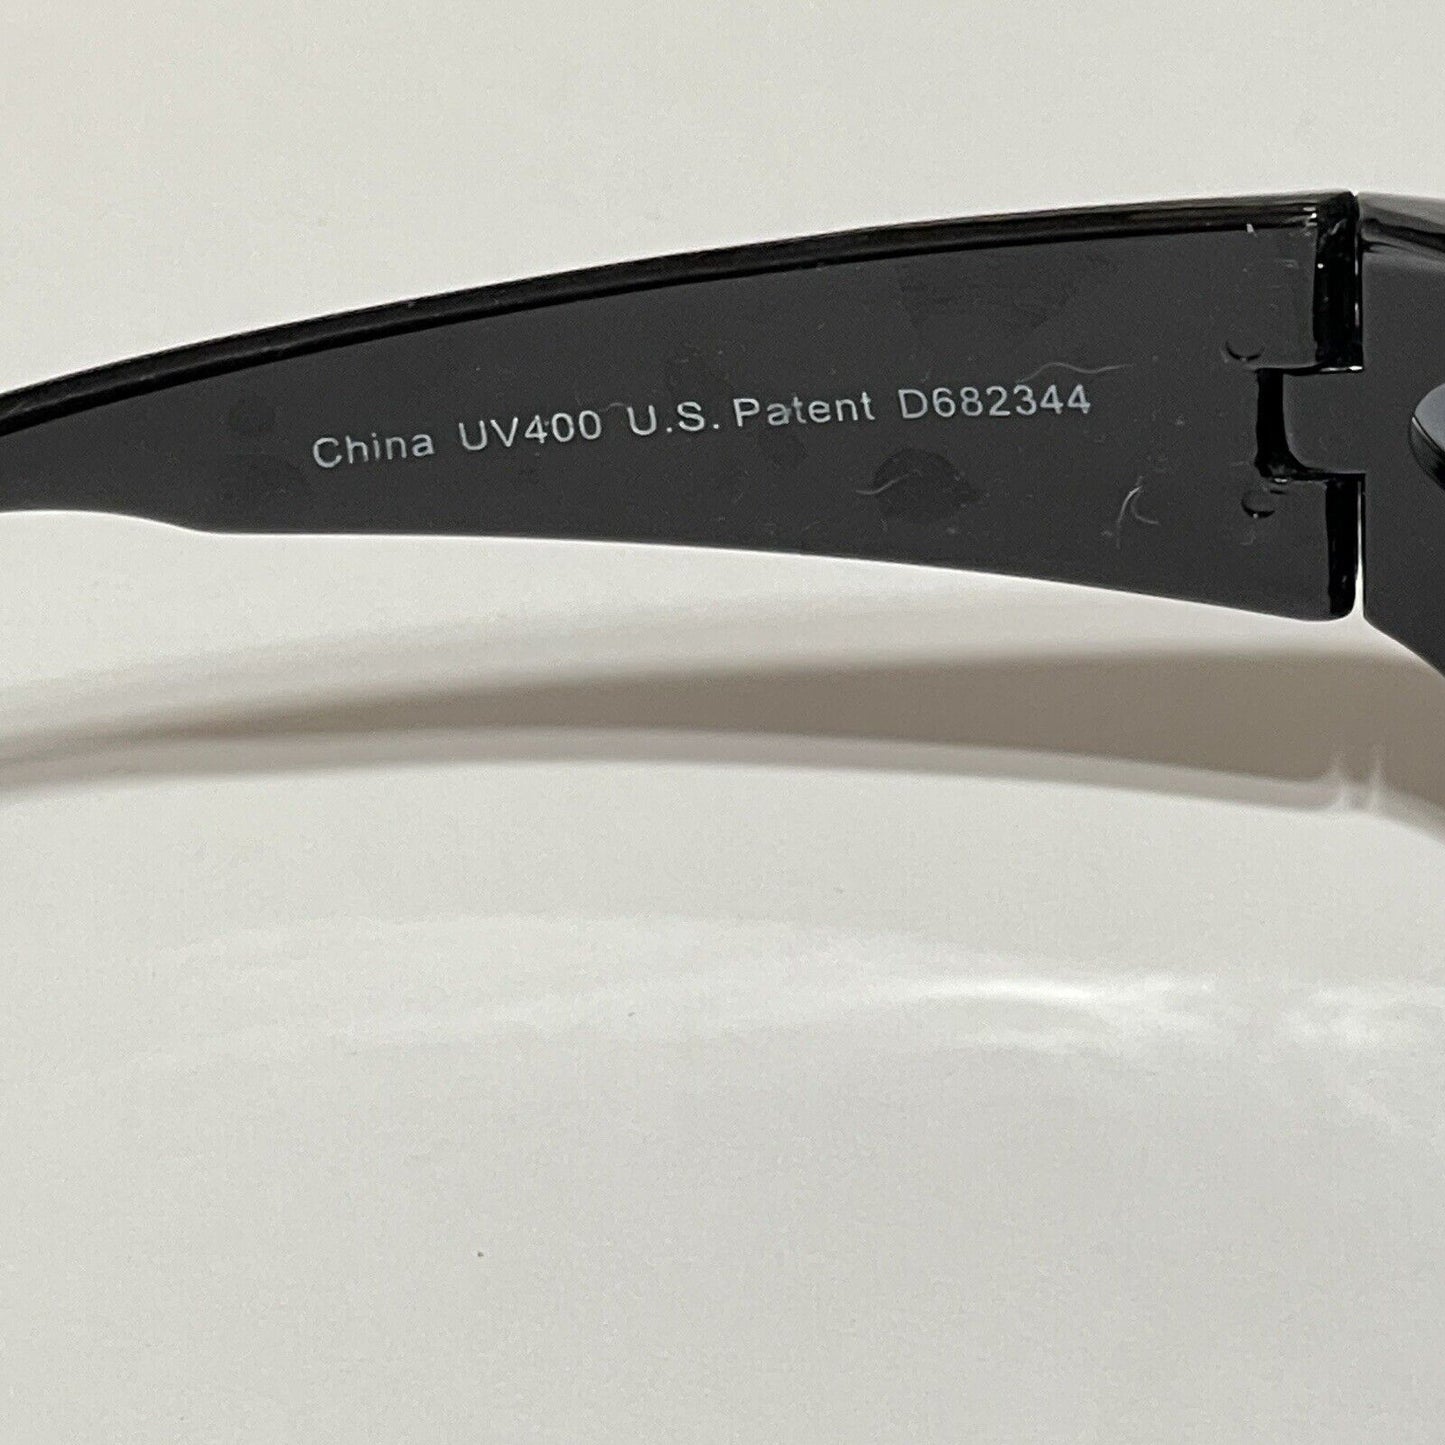 PinPoint Optics Wrap Around Sunglasses Fit Over Glasses UV 400 Black